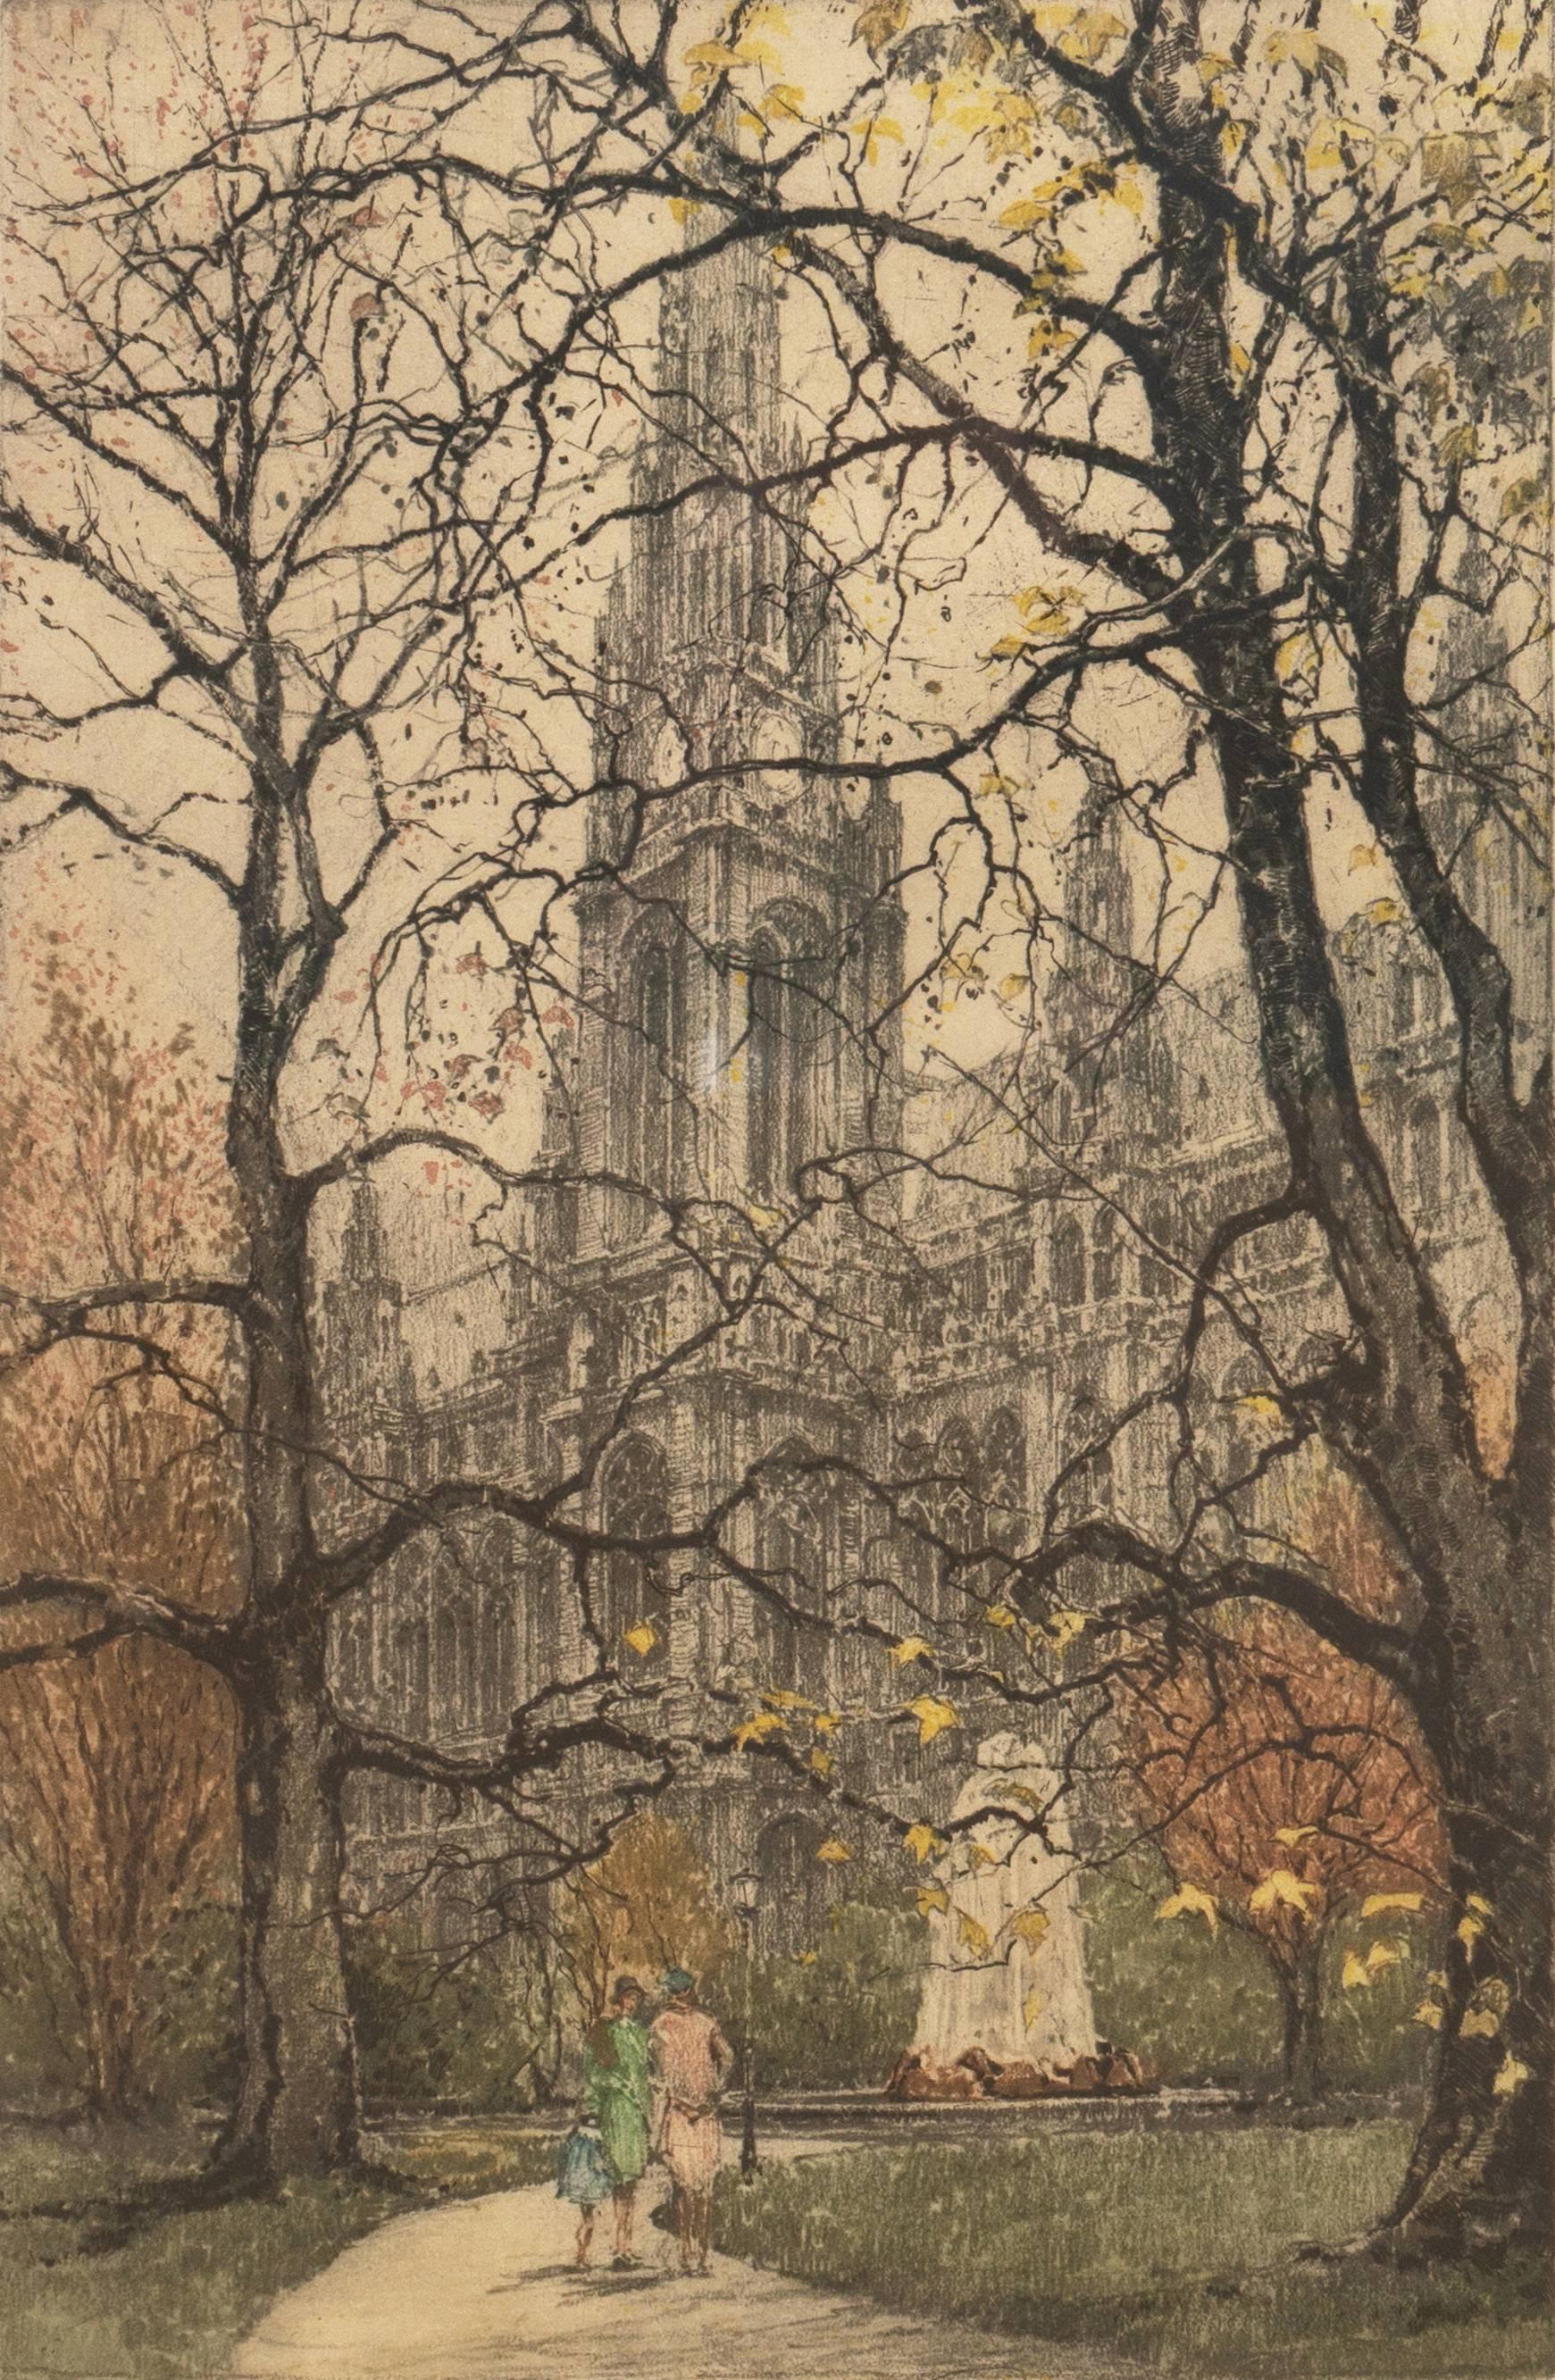 Luigi Kasimir Landscape Print - 'St. Stephen's Cathedral, Vienna', color etching pioneer, Metropolitan Museum